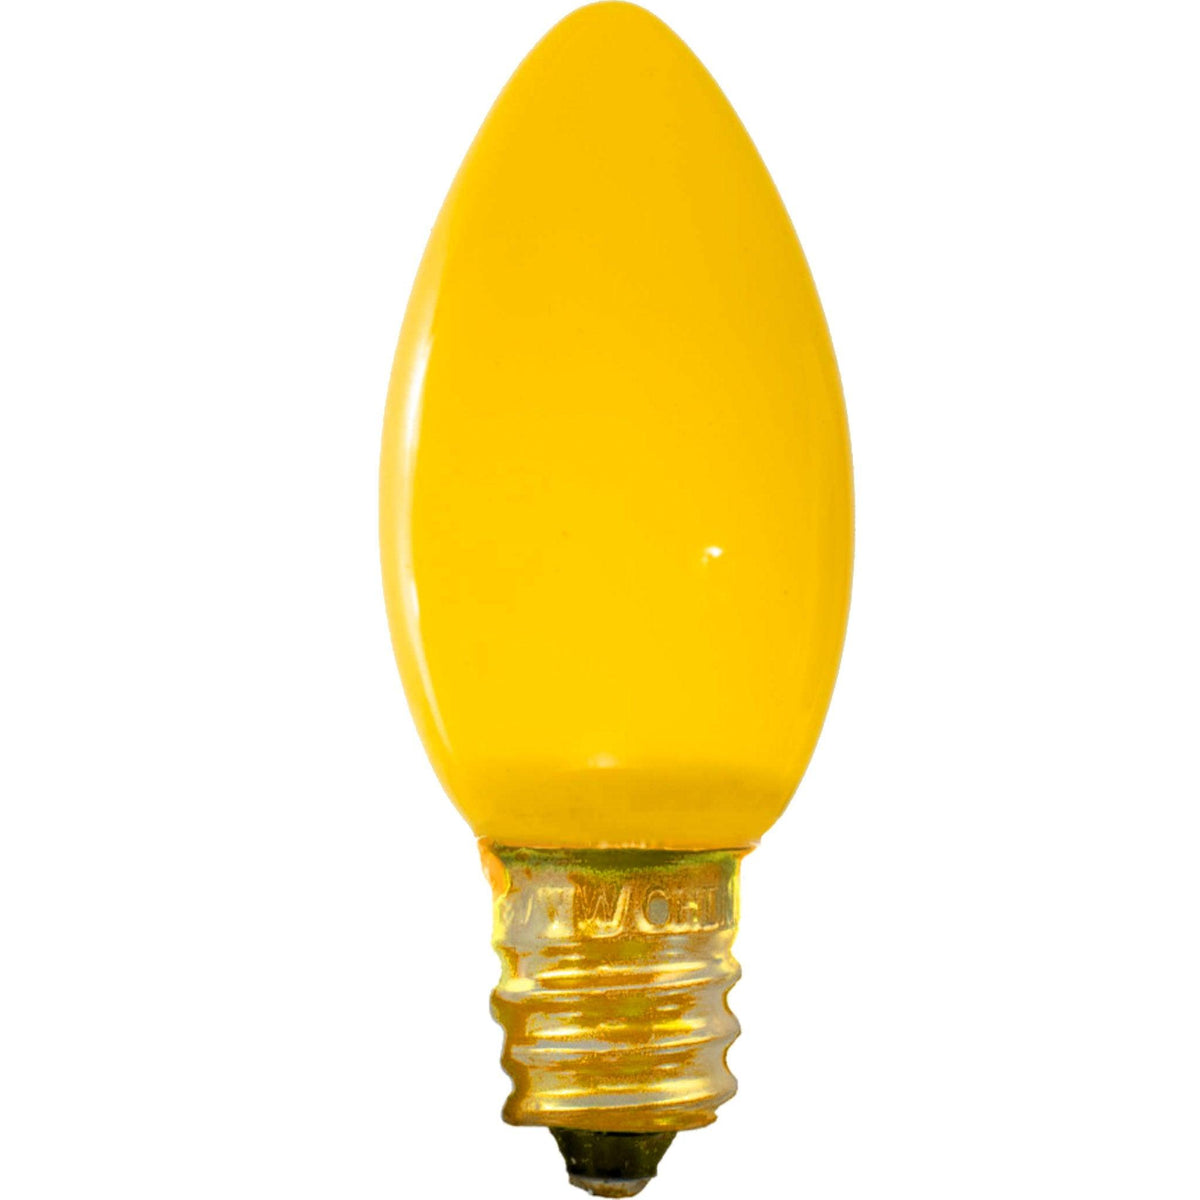 Lee Display's C7/C9 Candelabra Style Solid Yellow Ceramic Christmas Light Bulbs on Sale at leedisplay.com